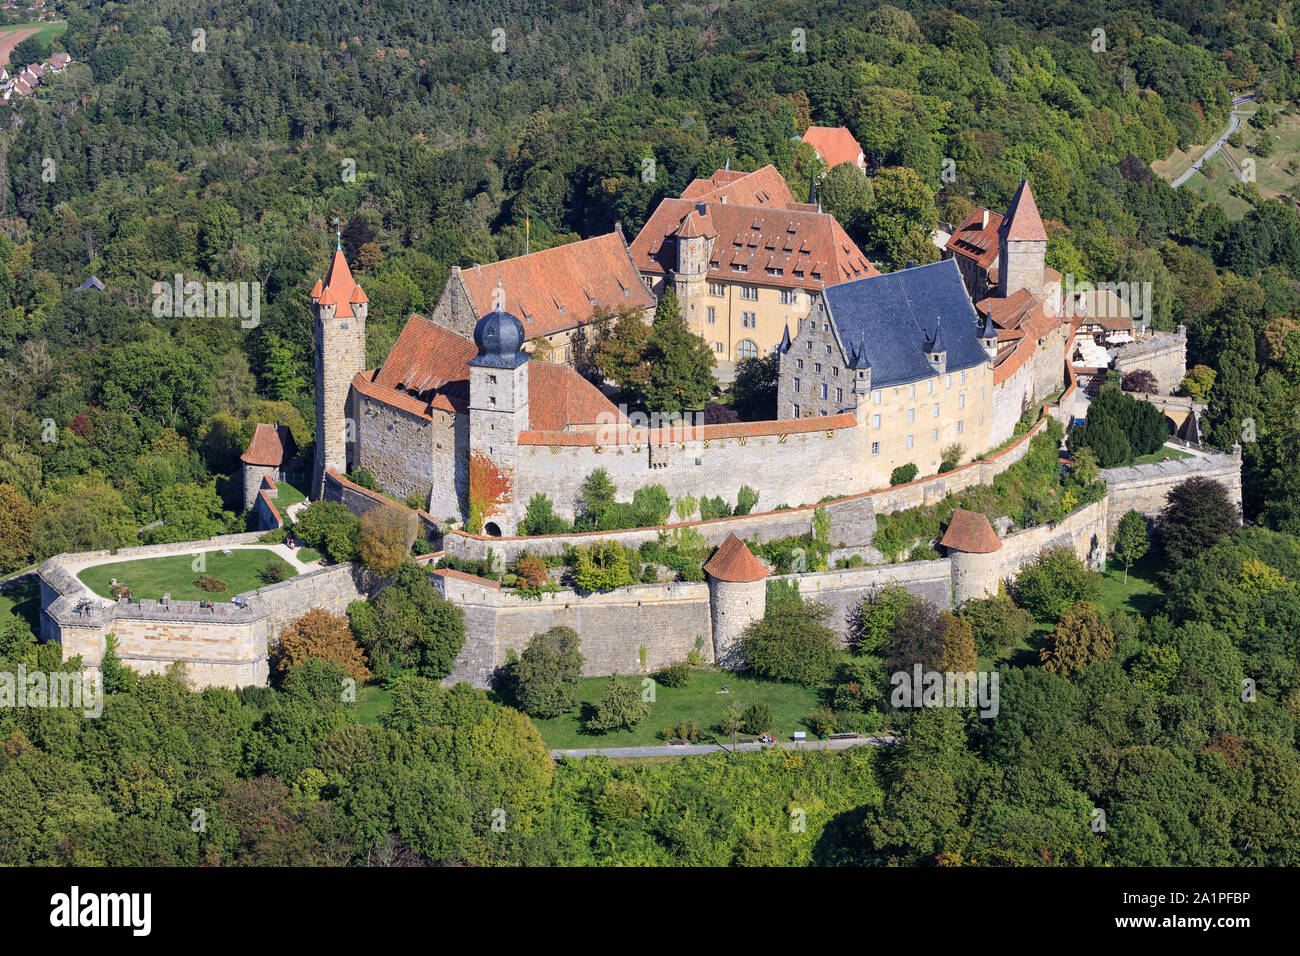 Veste Coburg (Fortress of Coburg), Germany Stock Photo